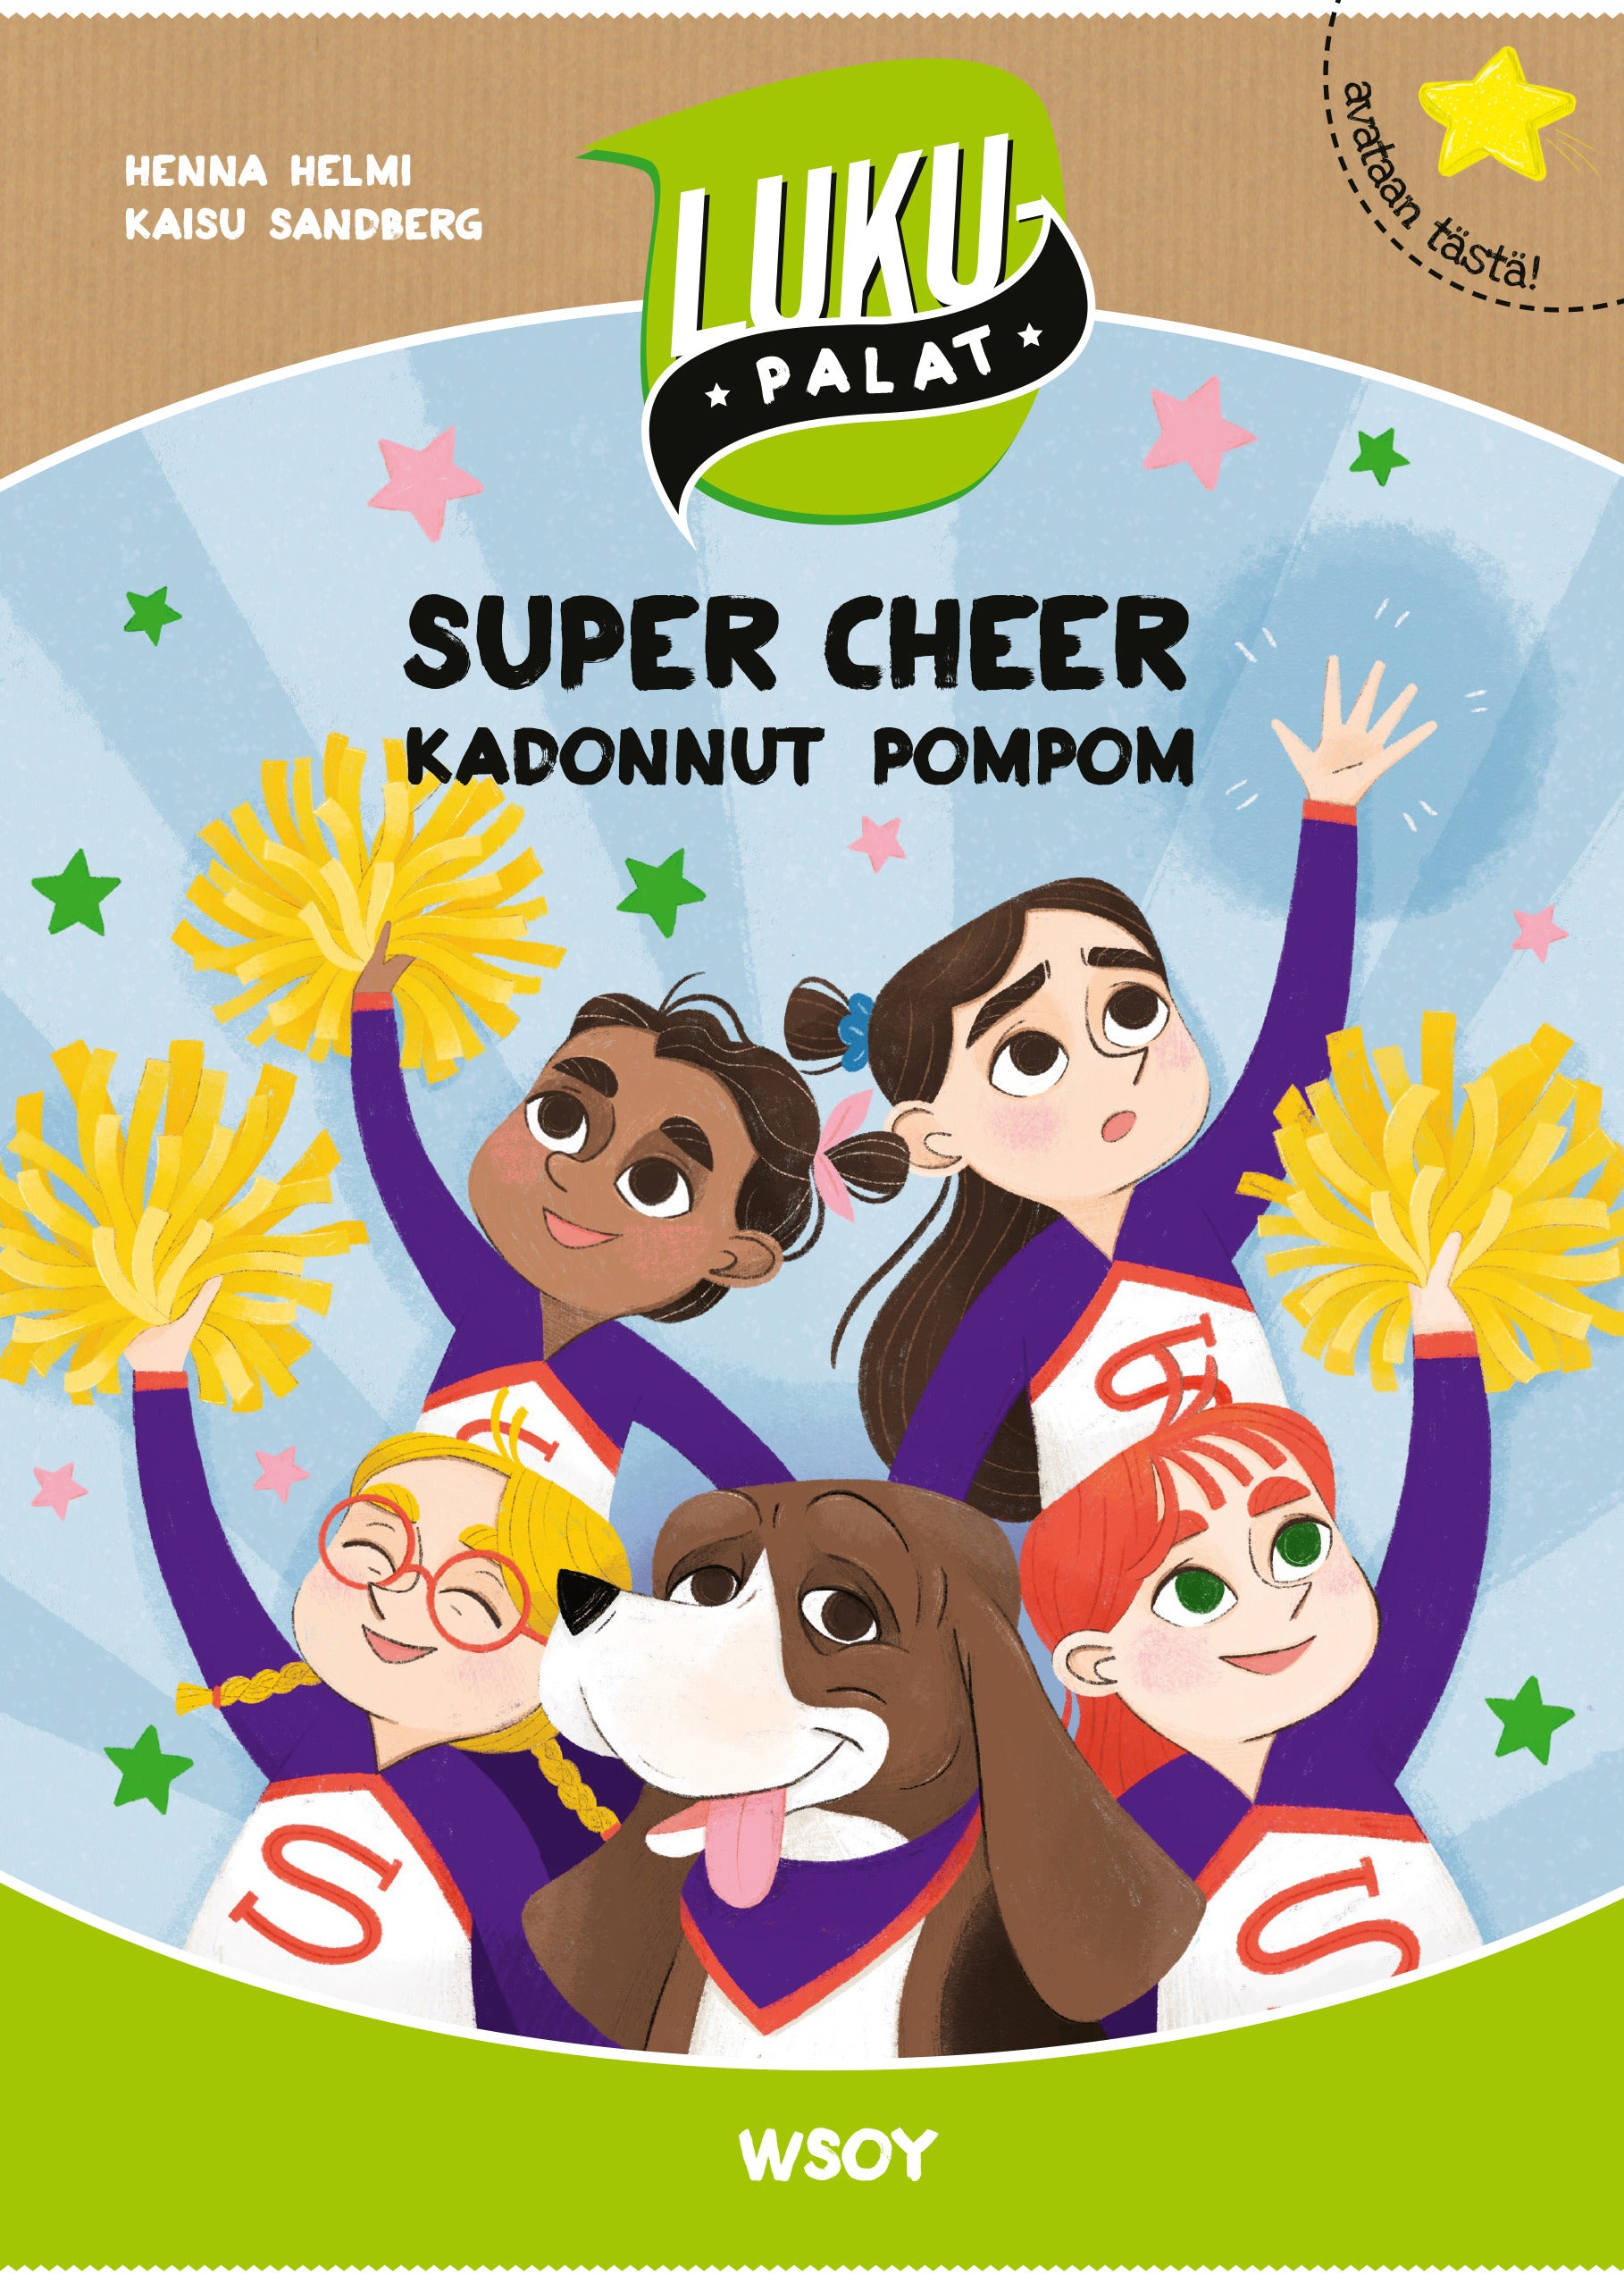 Super Cheer: Kadonnut pompom